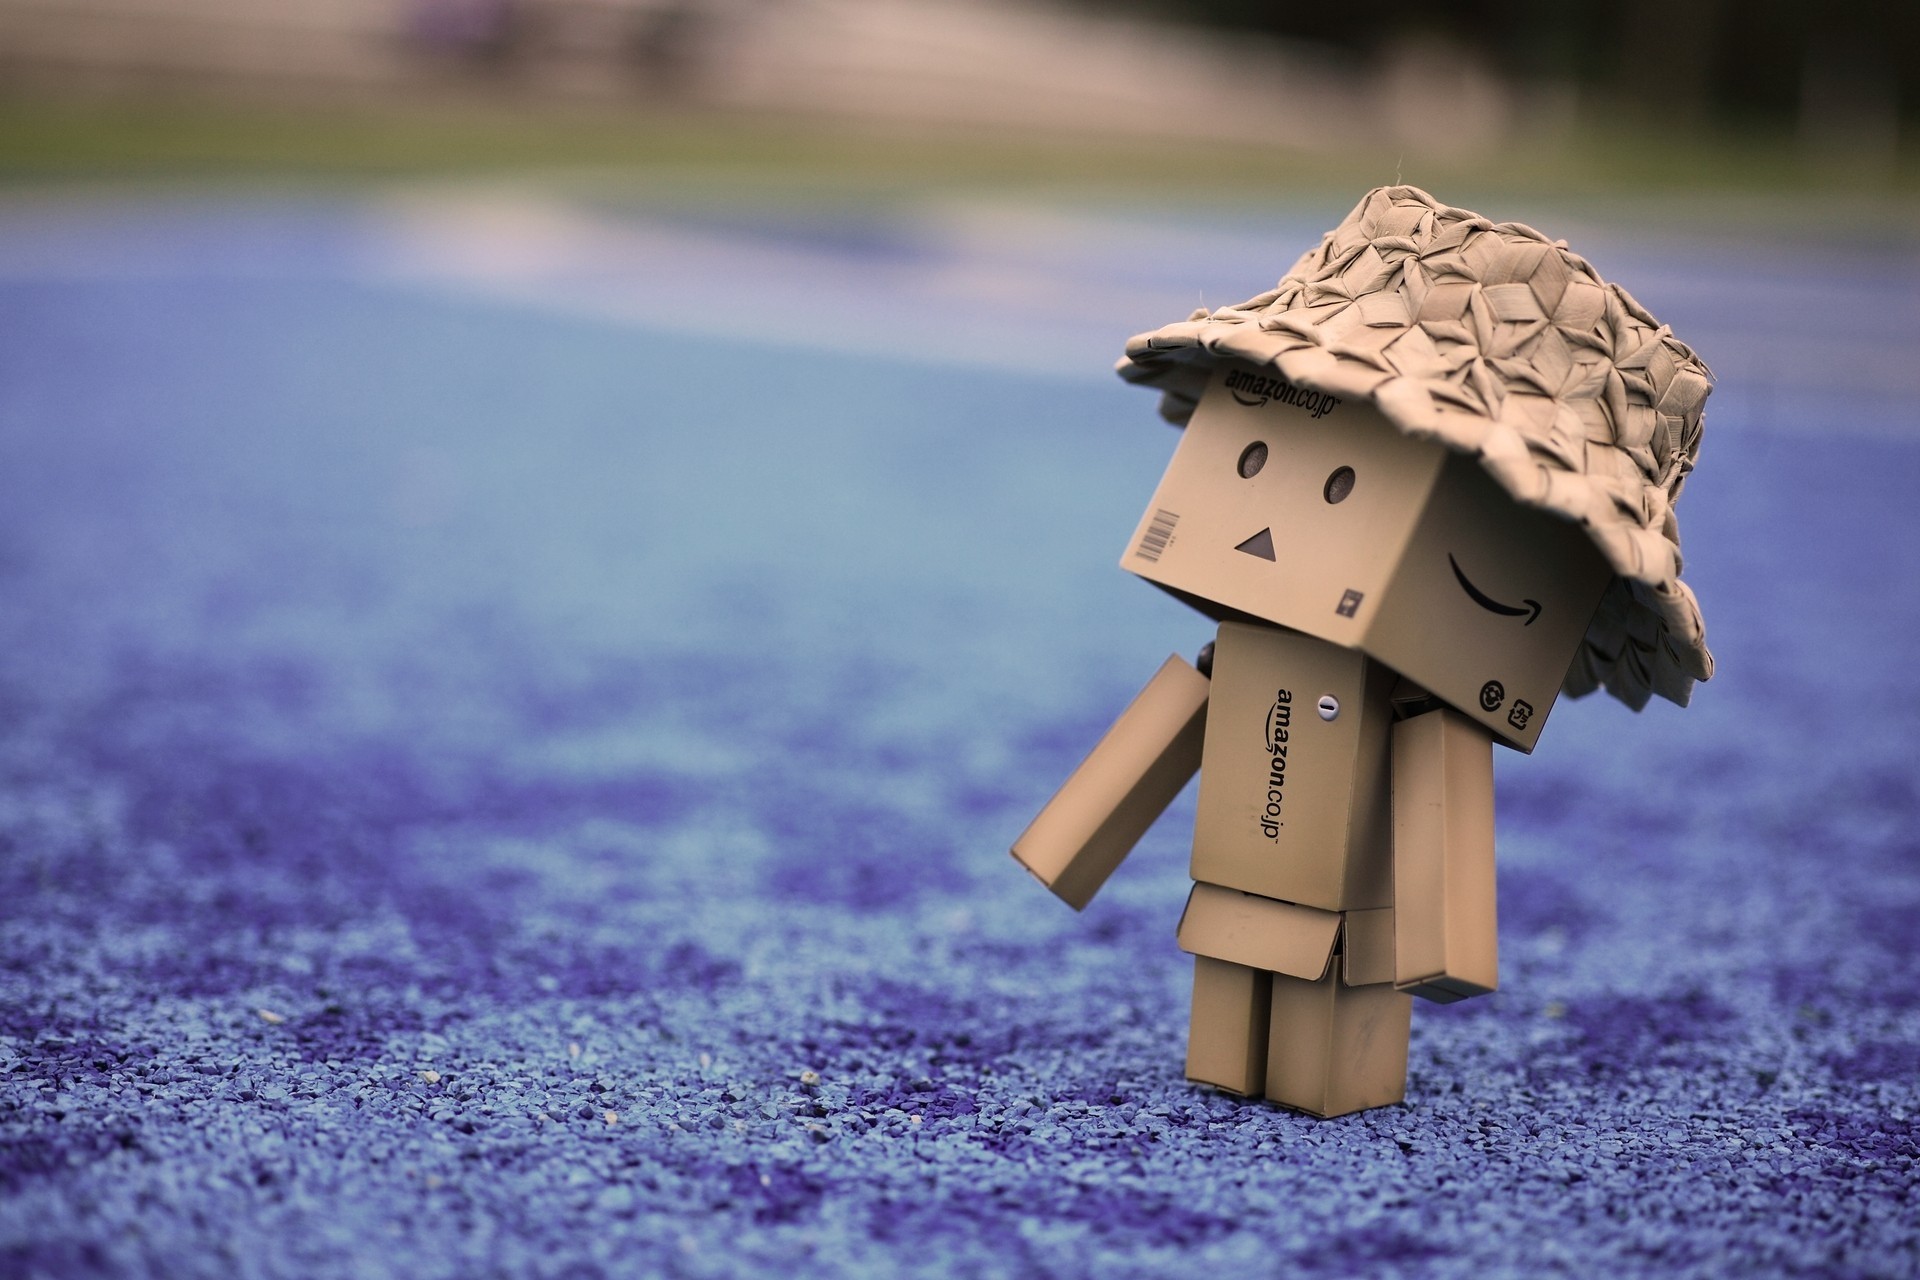 miscellanea, miscellaneous, stroll, danbo, cardboard robot, hat